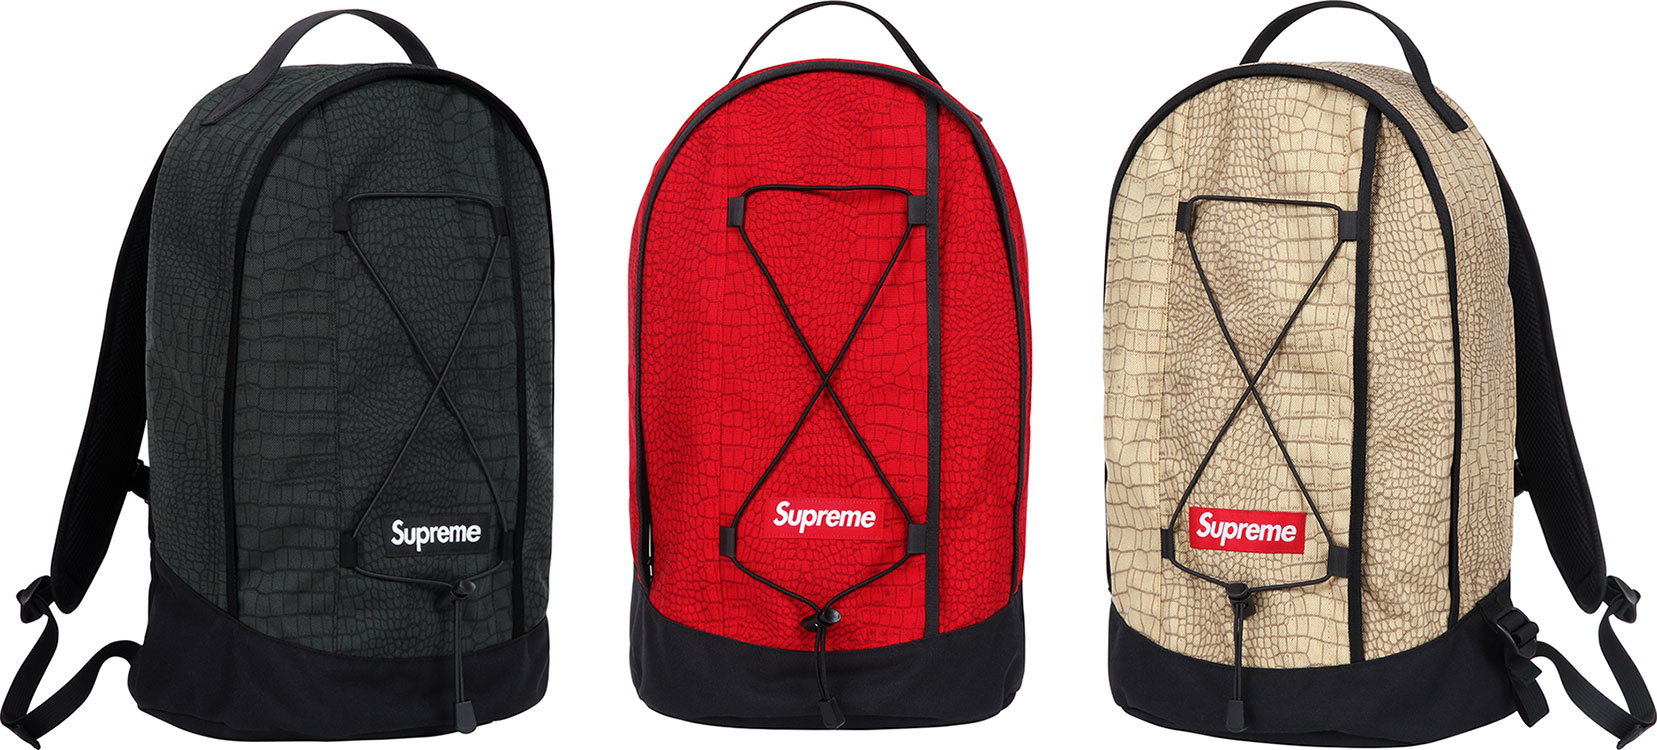 supreme backpack croc